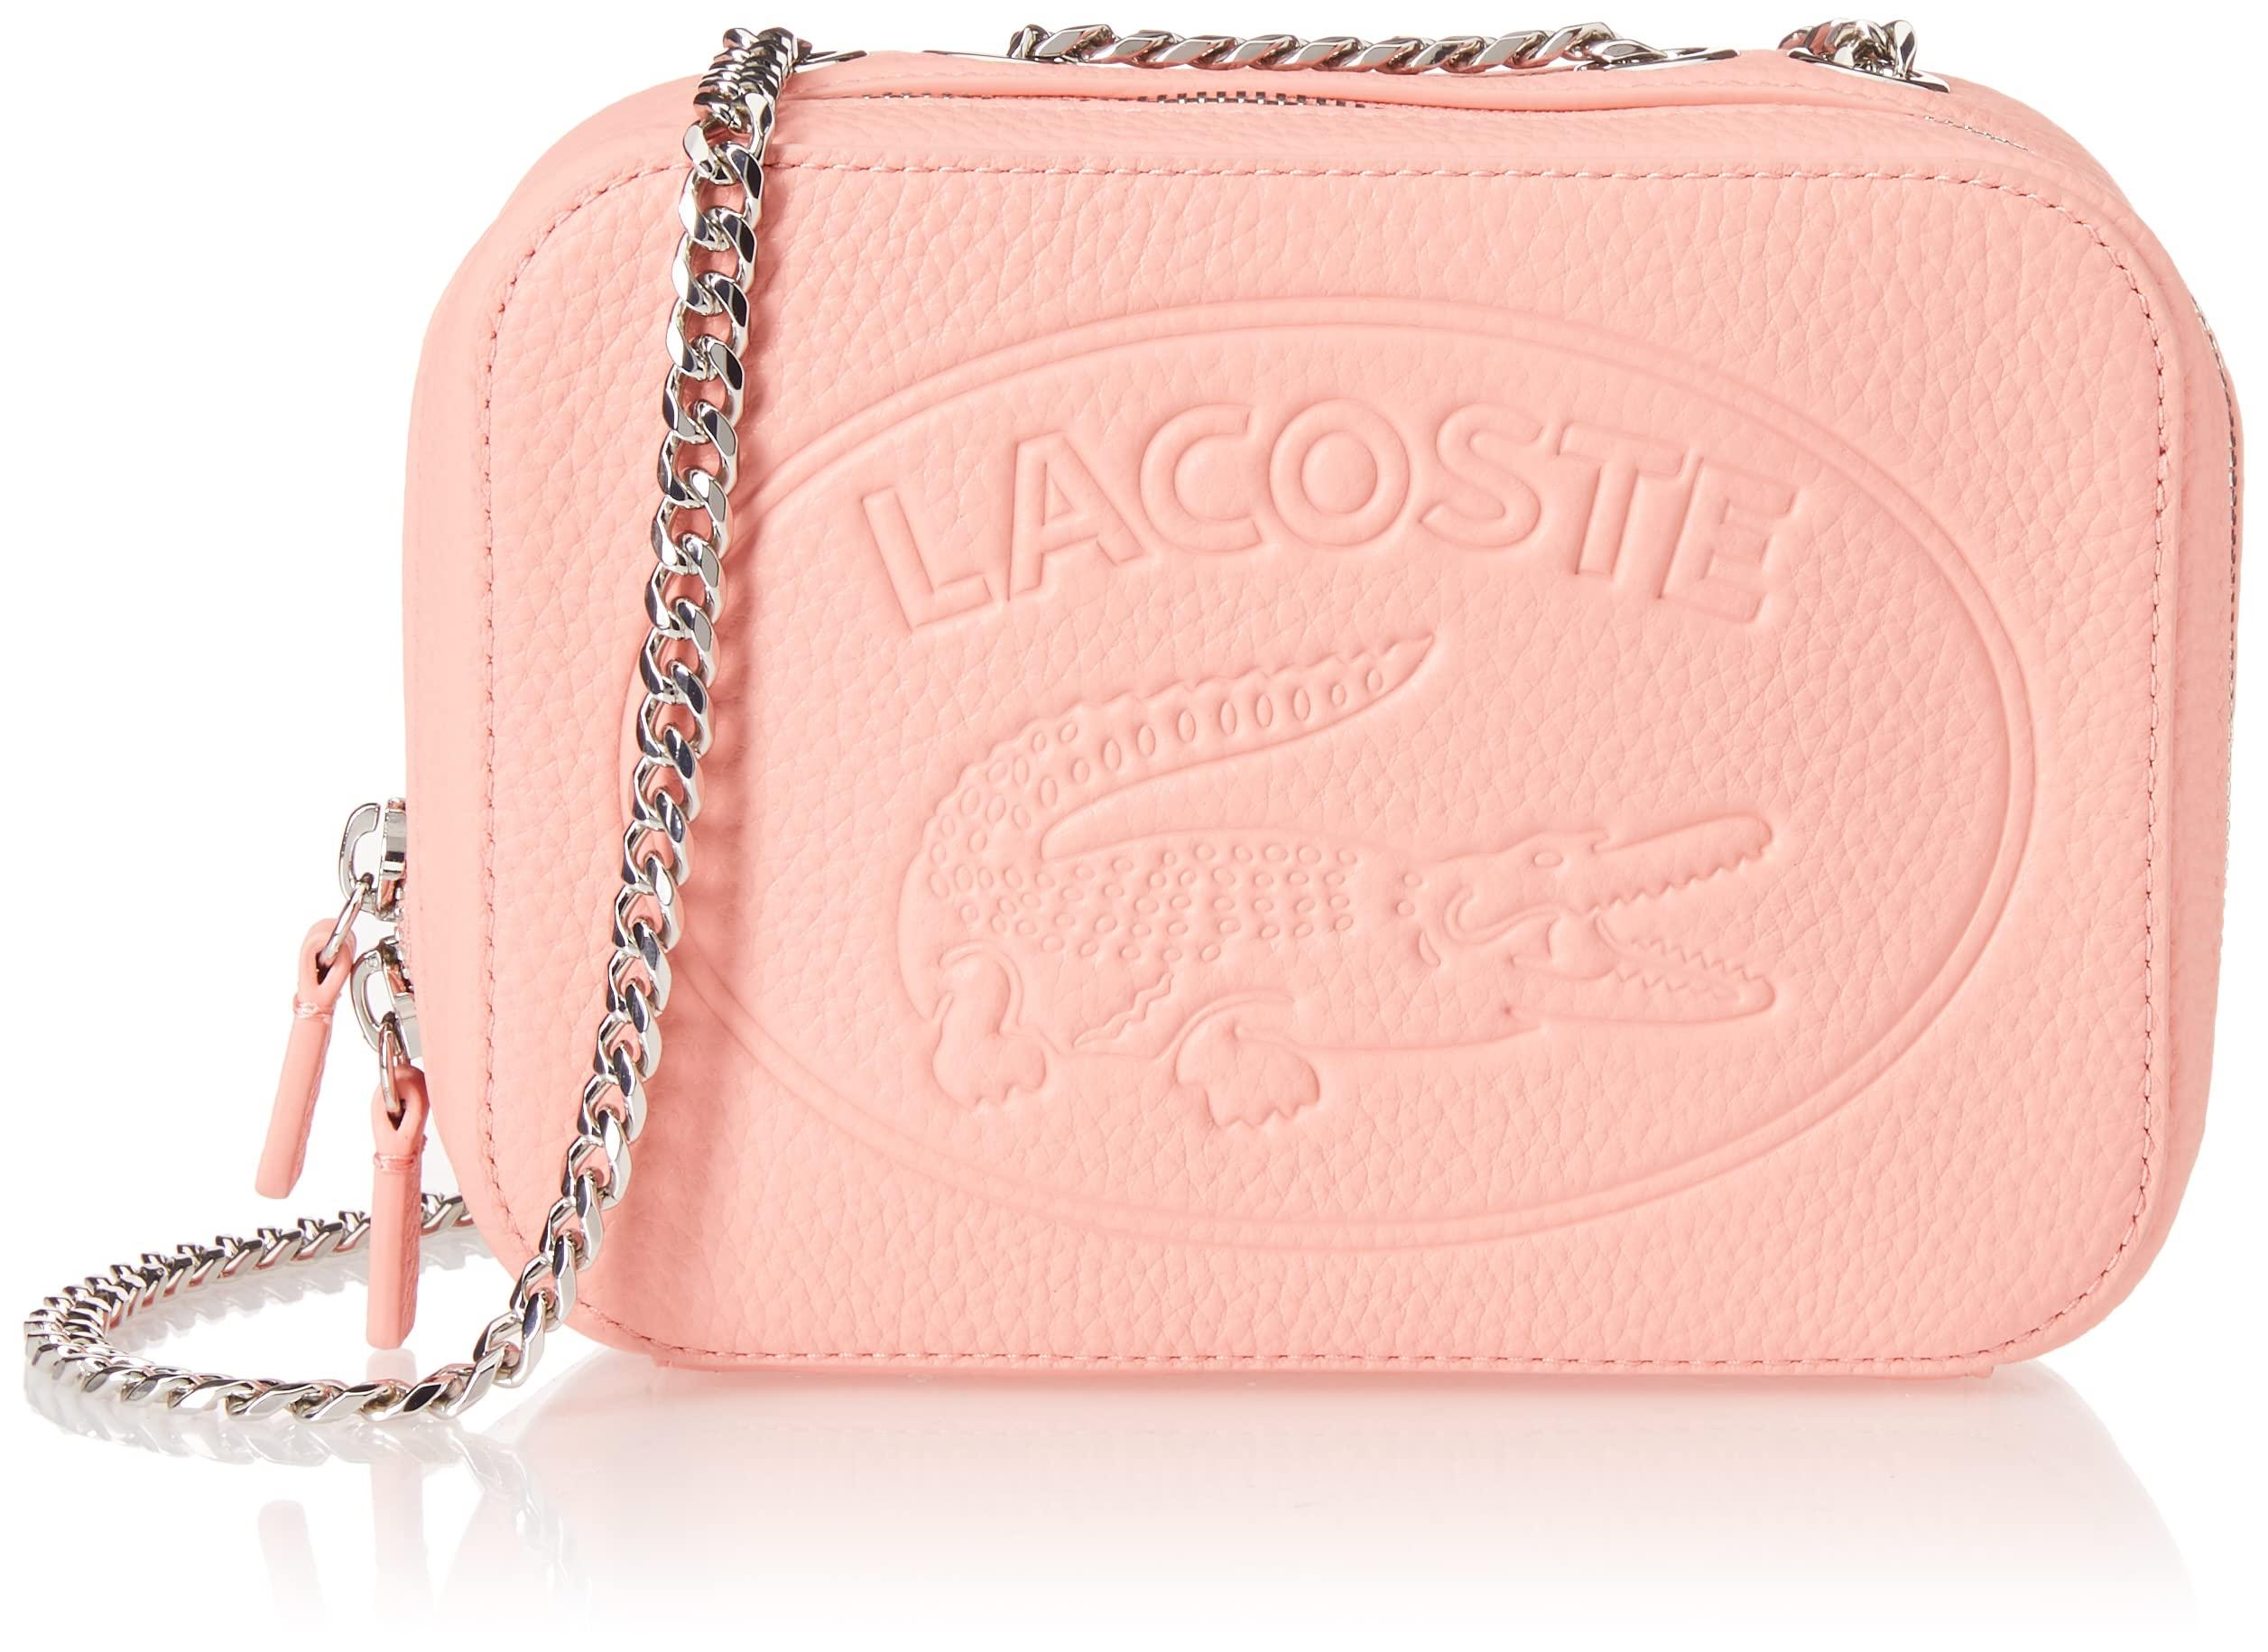 Lacoste Croco Crew Crossbody Bag in Pink - Lyst